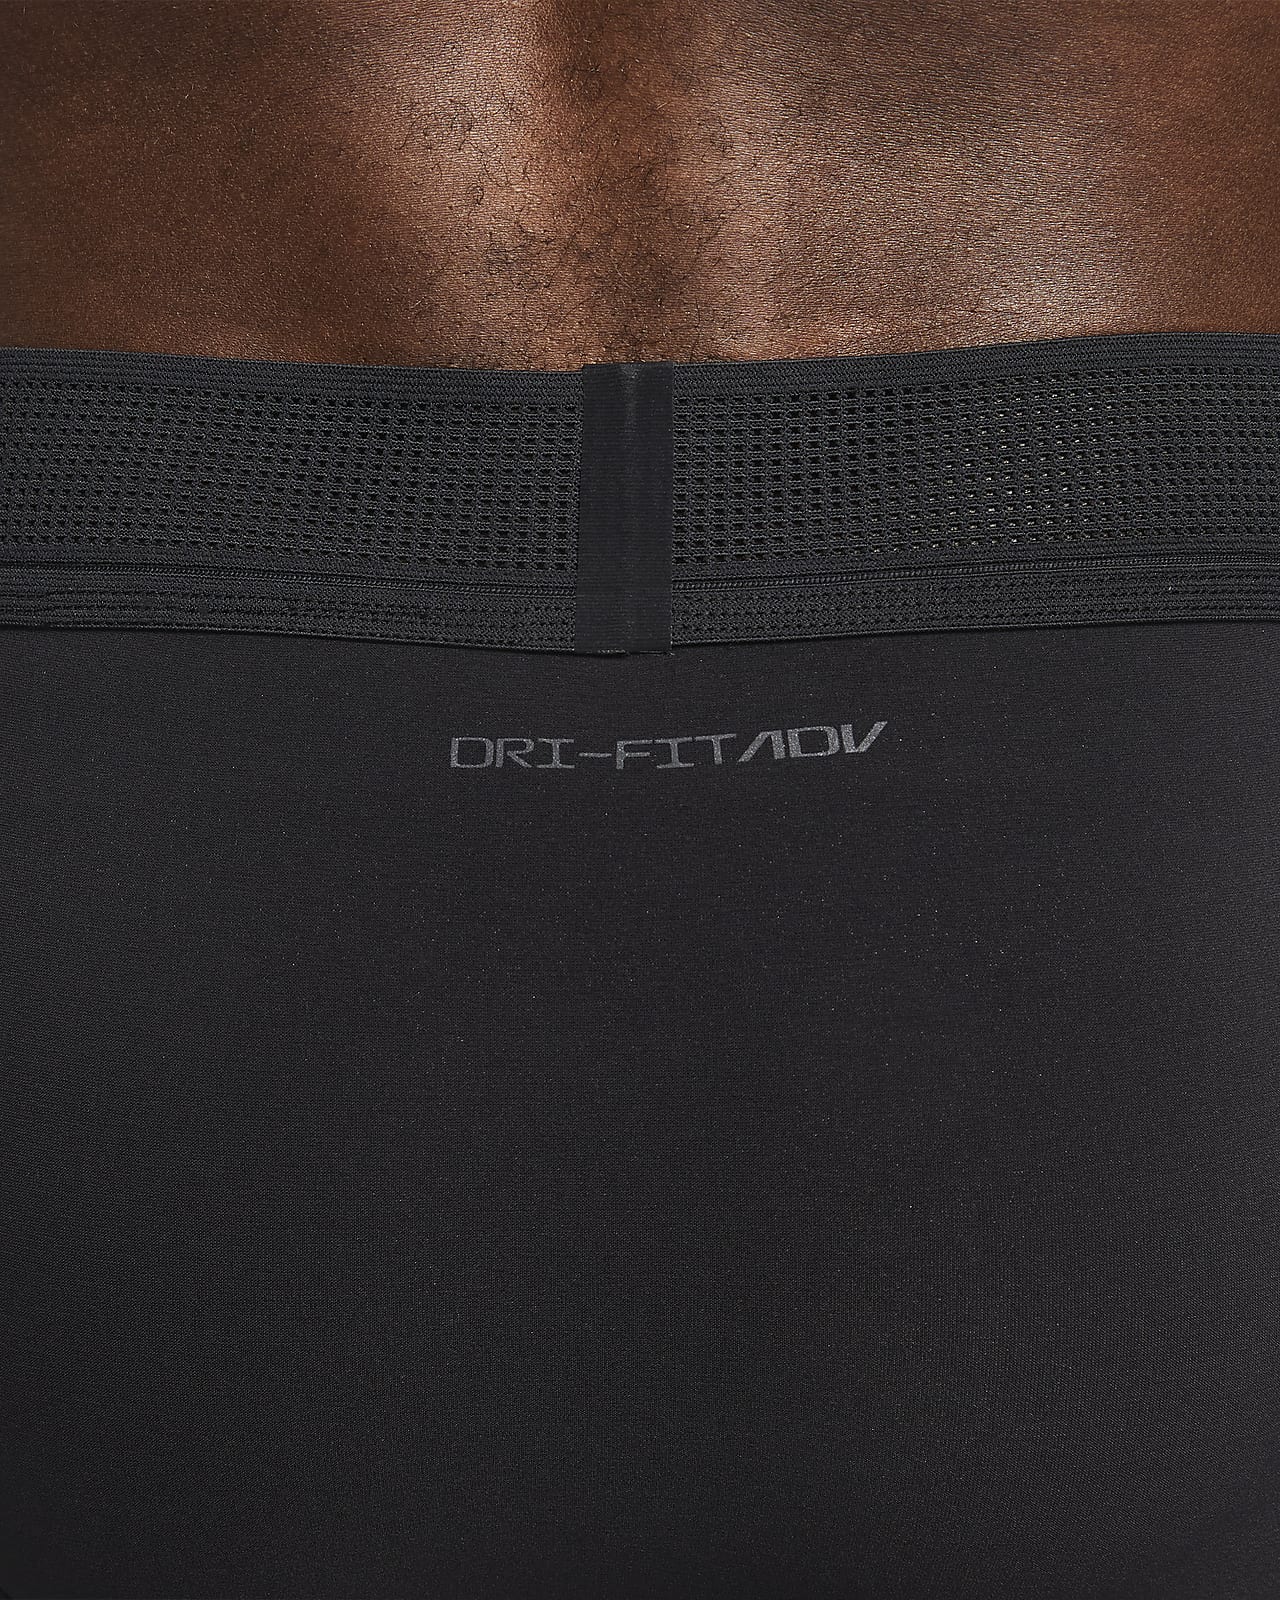 $110 Nike Pro Dri-FIT ADV Recovery Men's Tights Black Size Medium